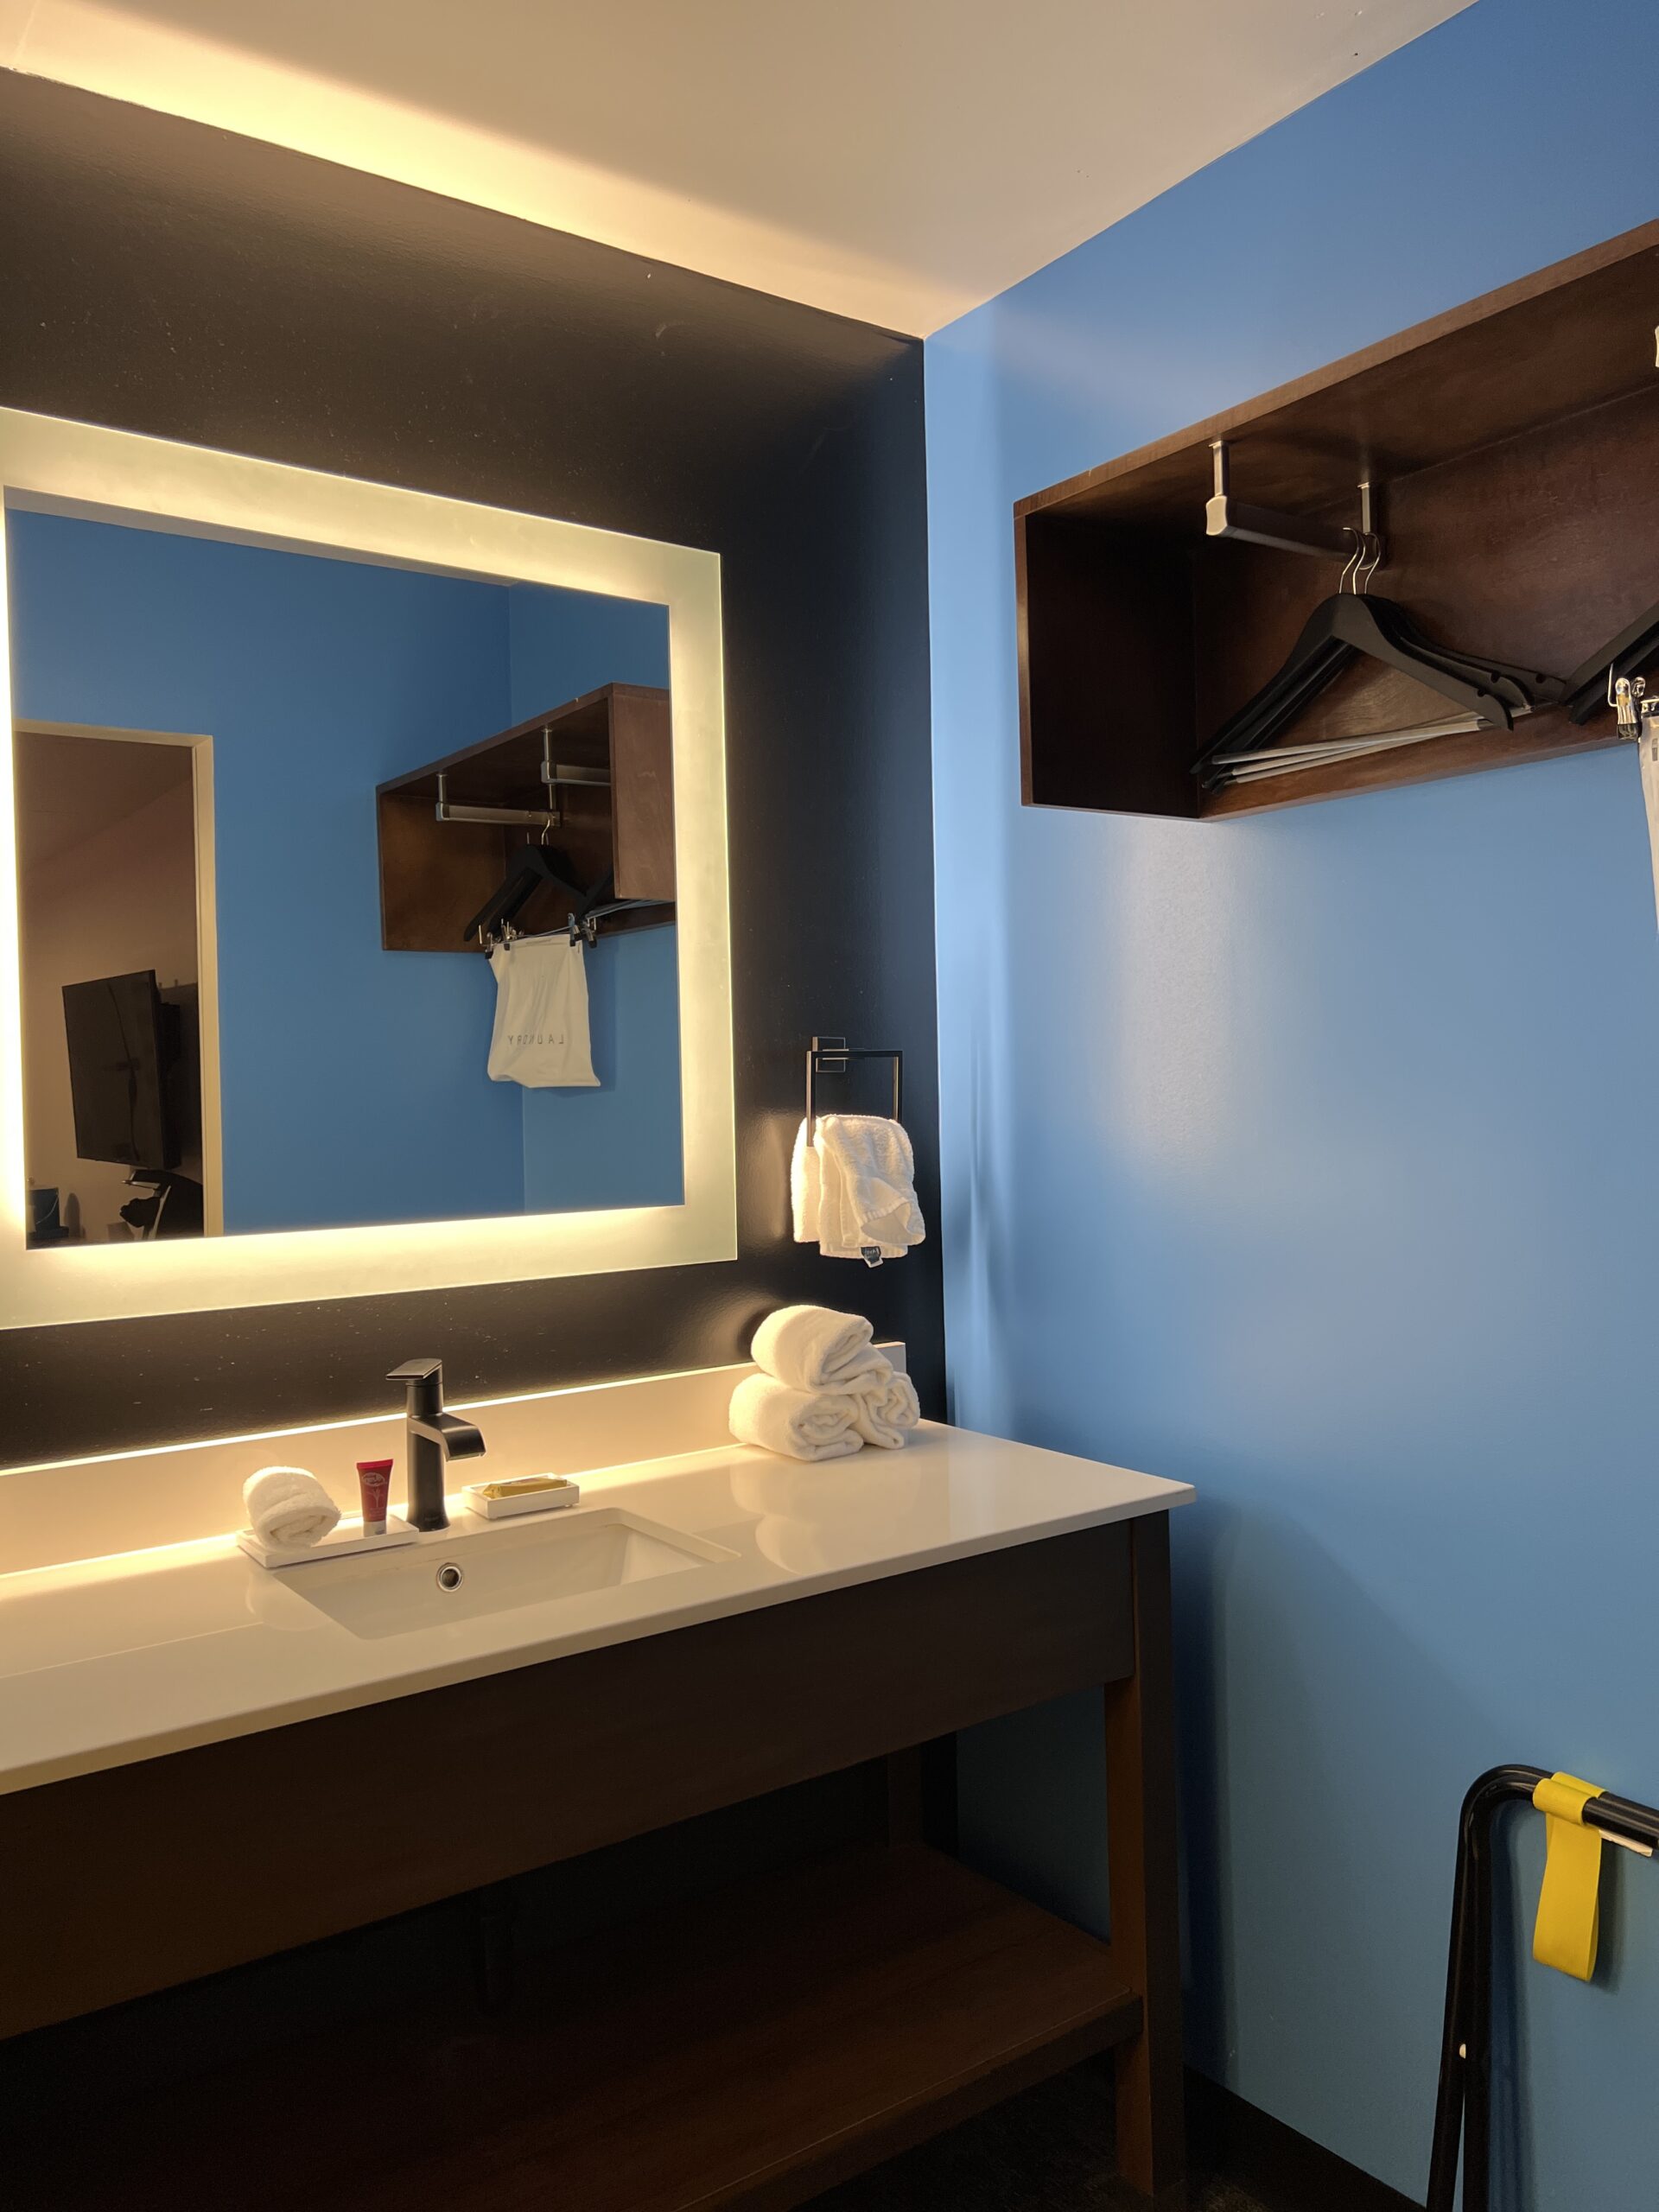 Bathroom sink in standard room at Cartoon Network Hotel in Lancaster portrait image